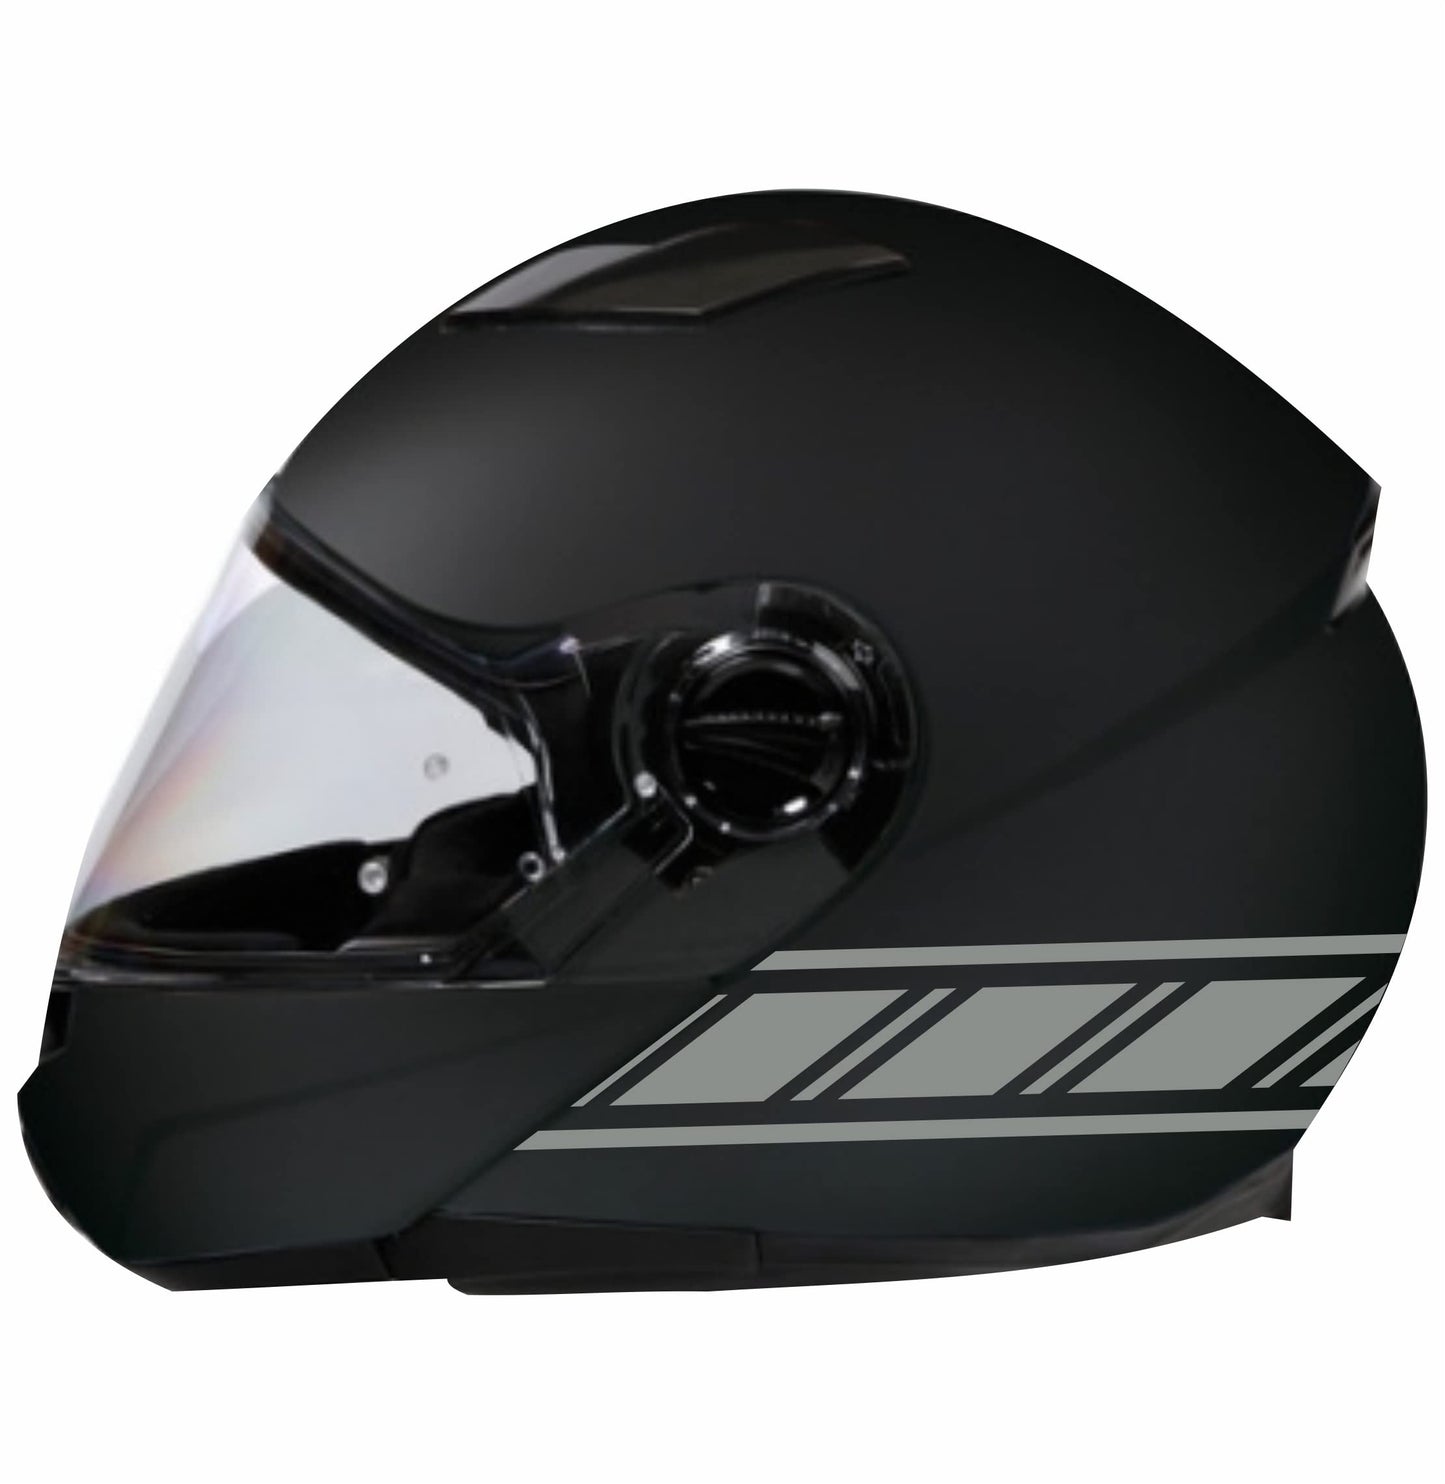 DualColorStampe Adesivi per casco moto motorino Helmet universale Stripes Strisce Design sportivo stickers COD.C0051 a €12.99 solo da DualColorStampe